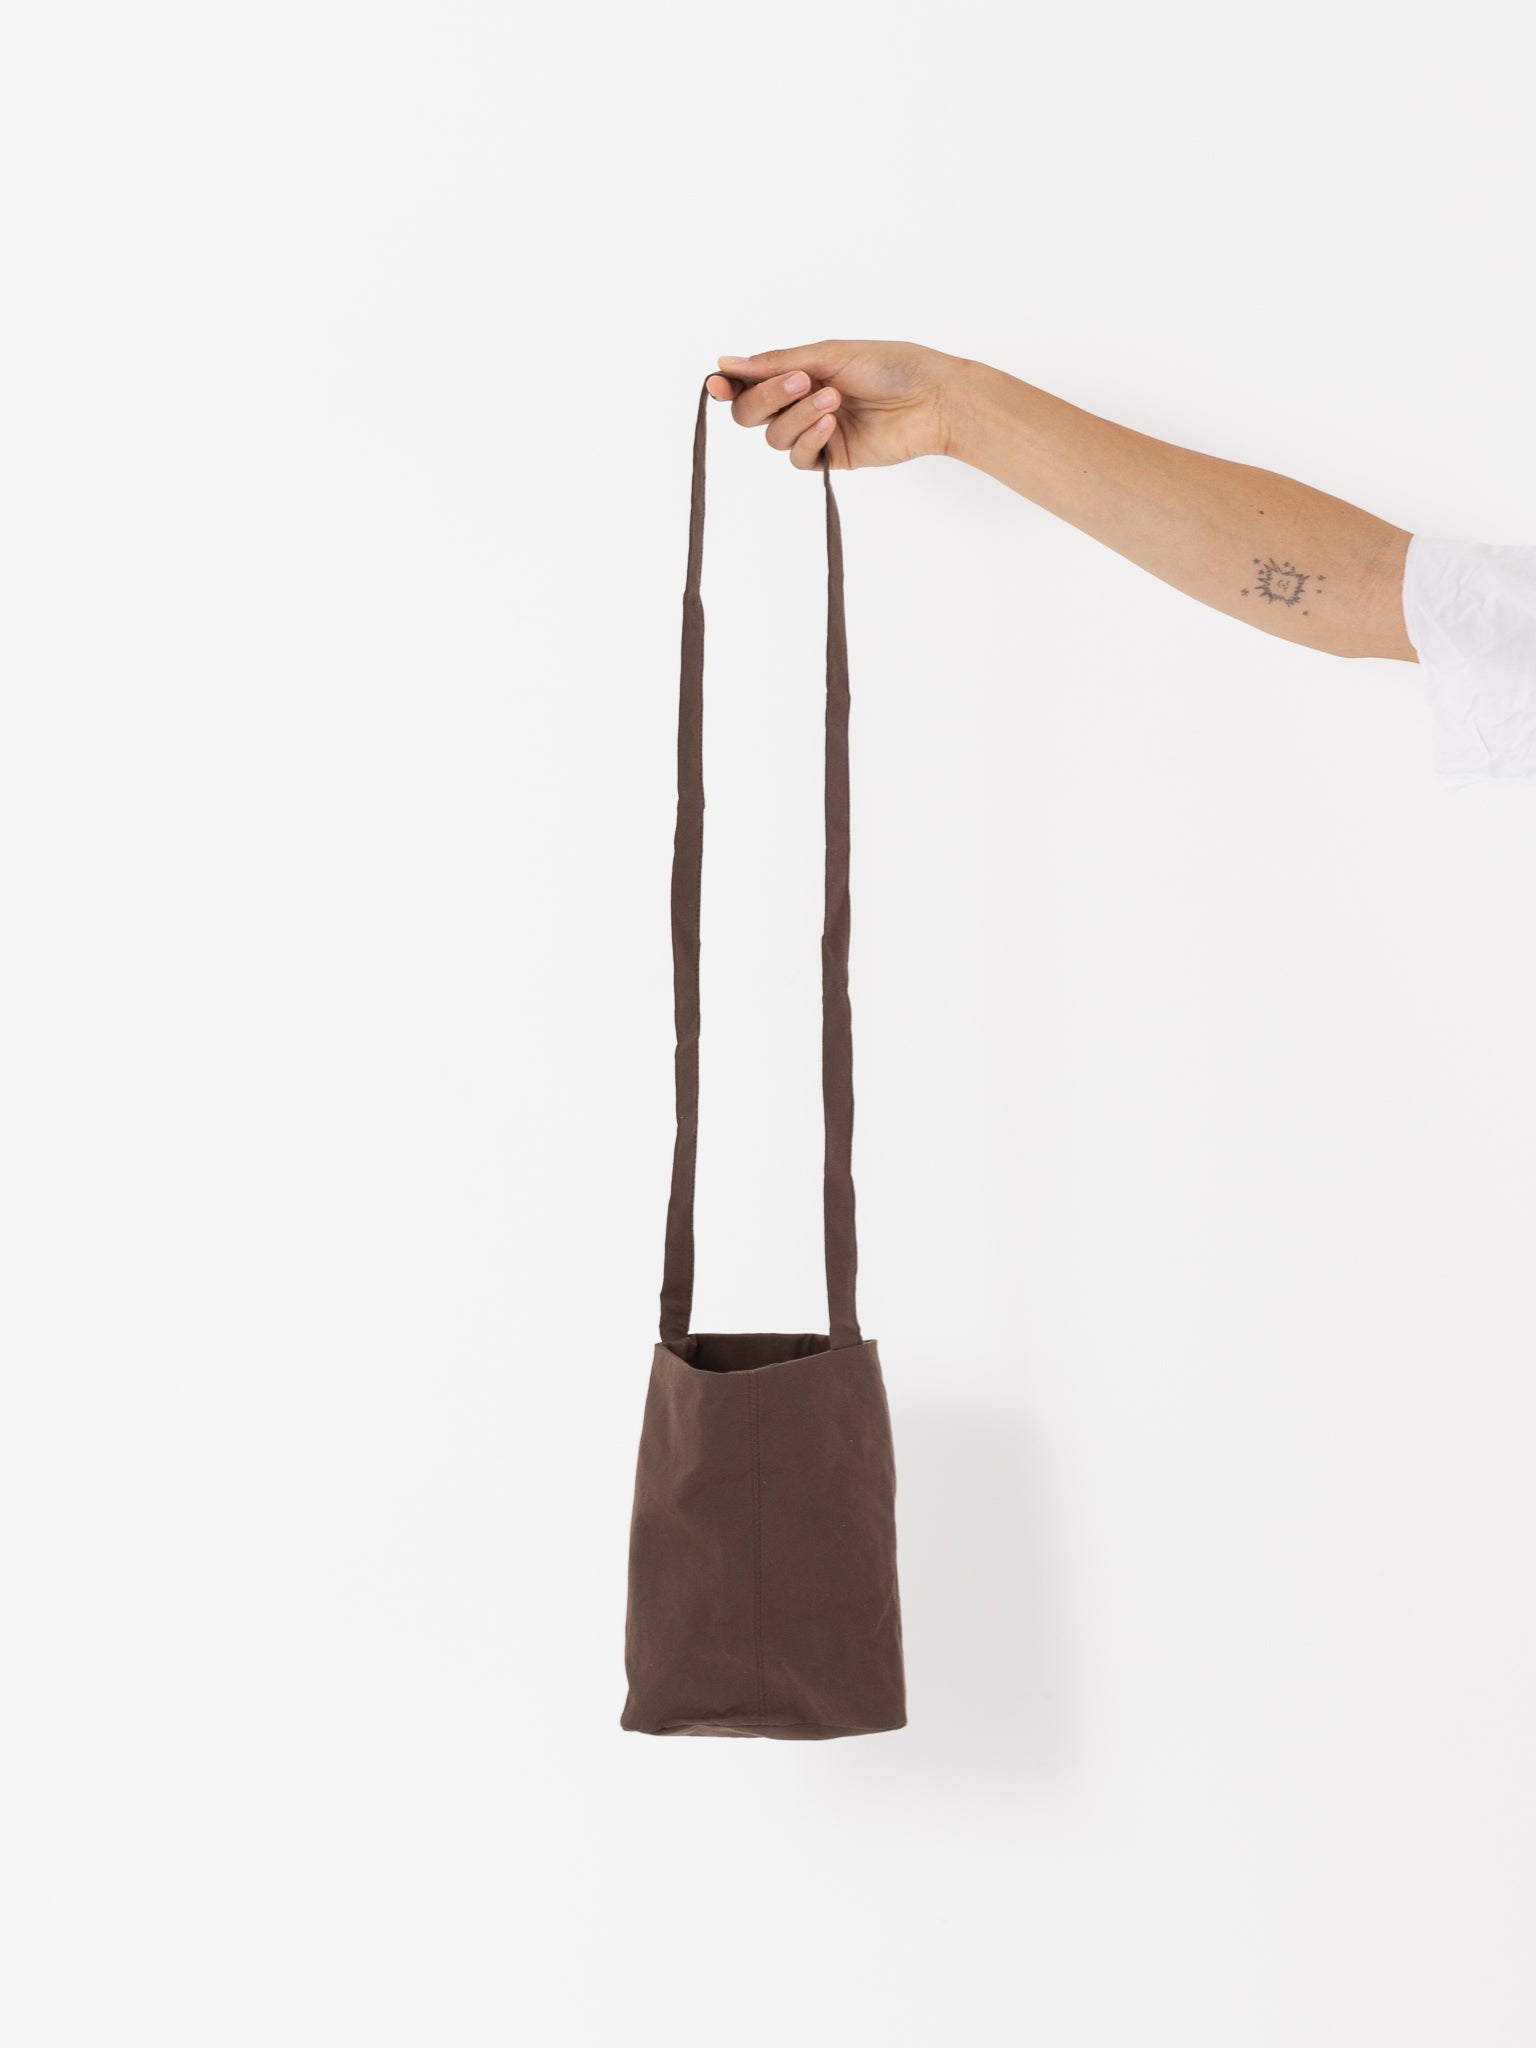 Studio Kettle Pint Bag, Cocoa - Worthwhile, Inc.